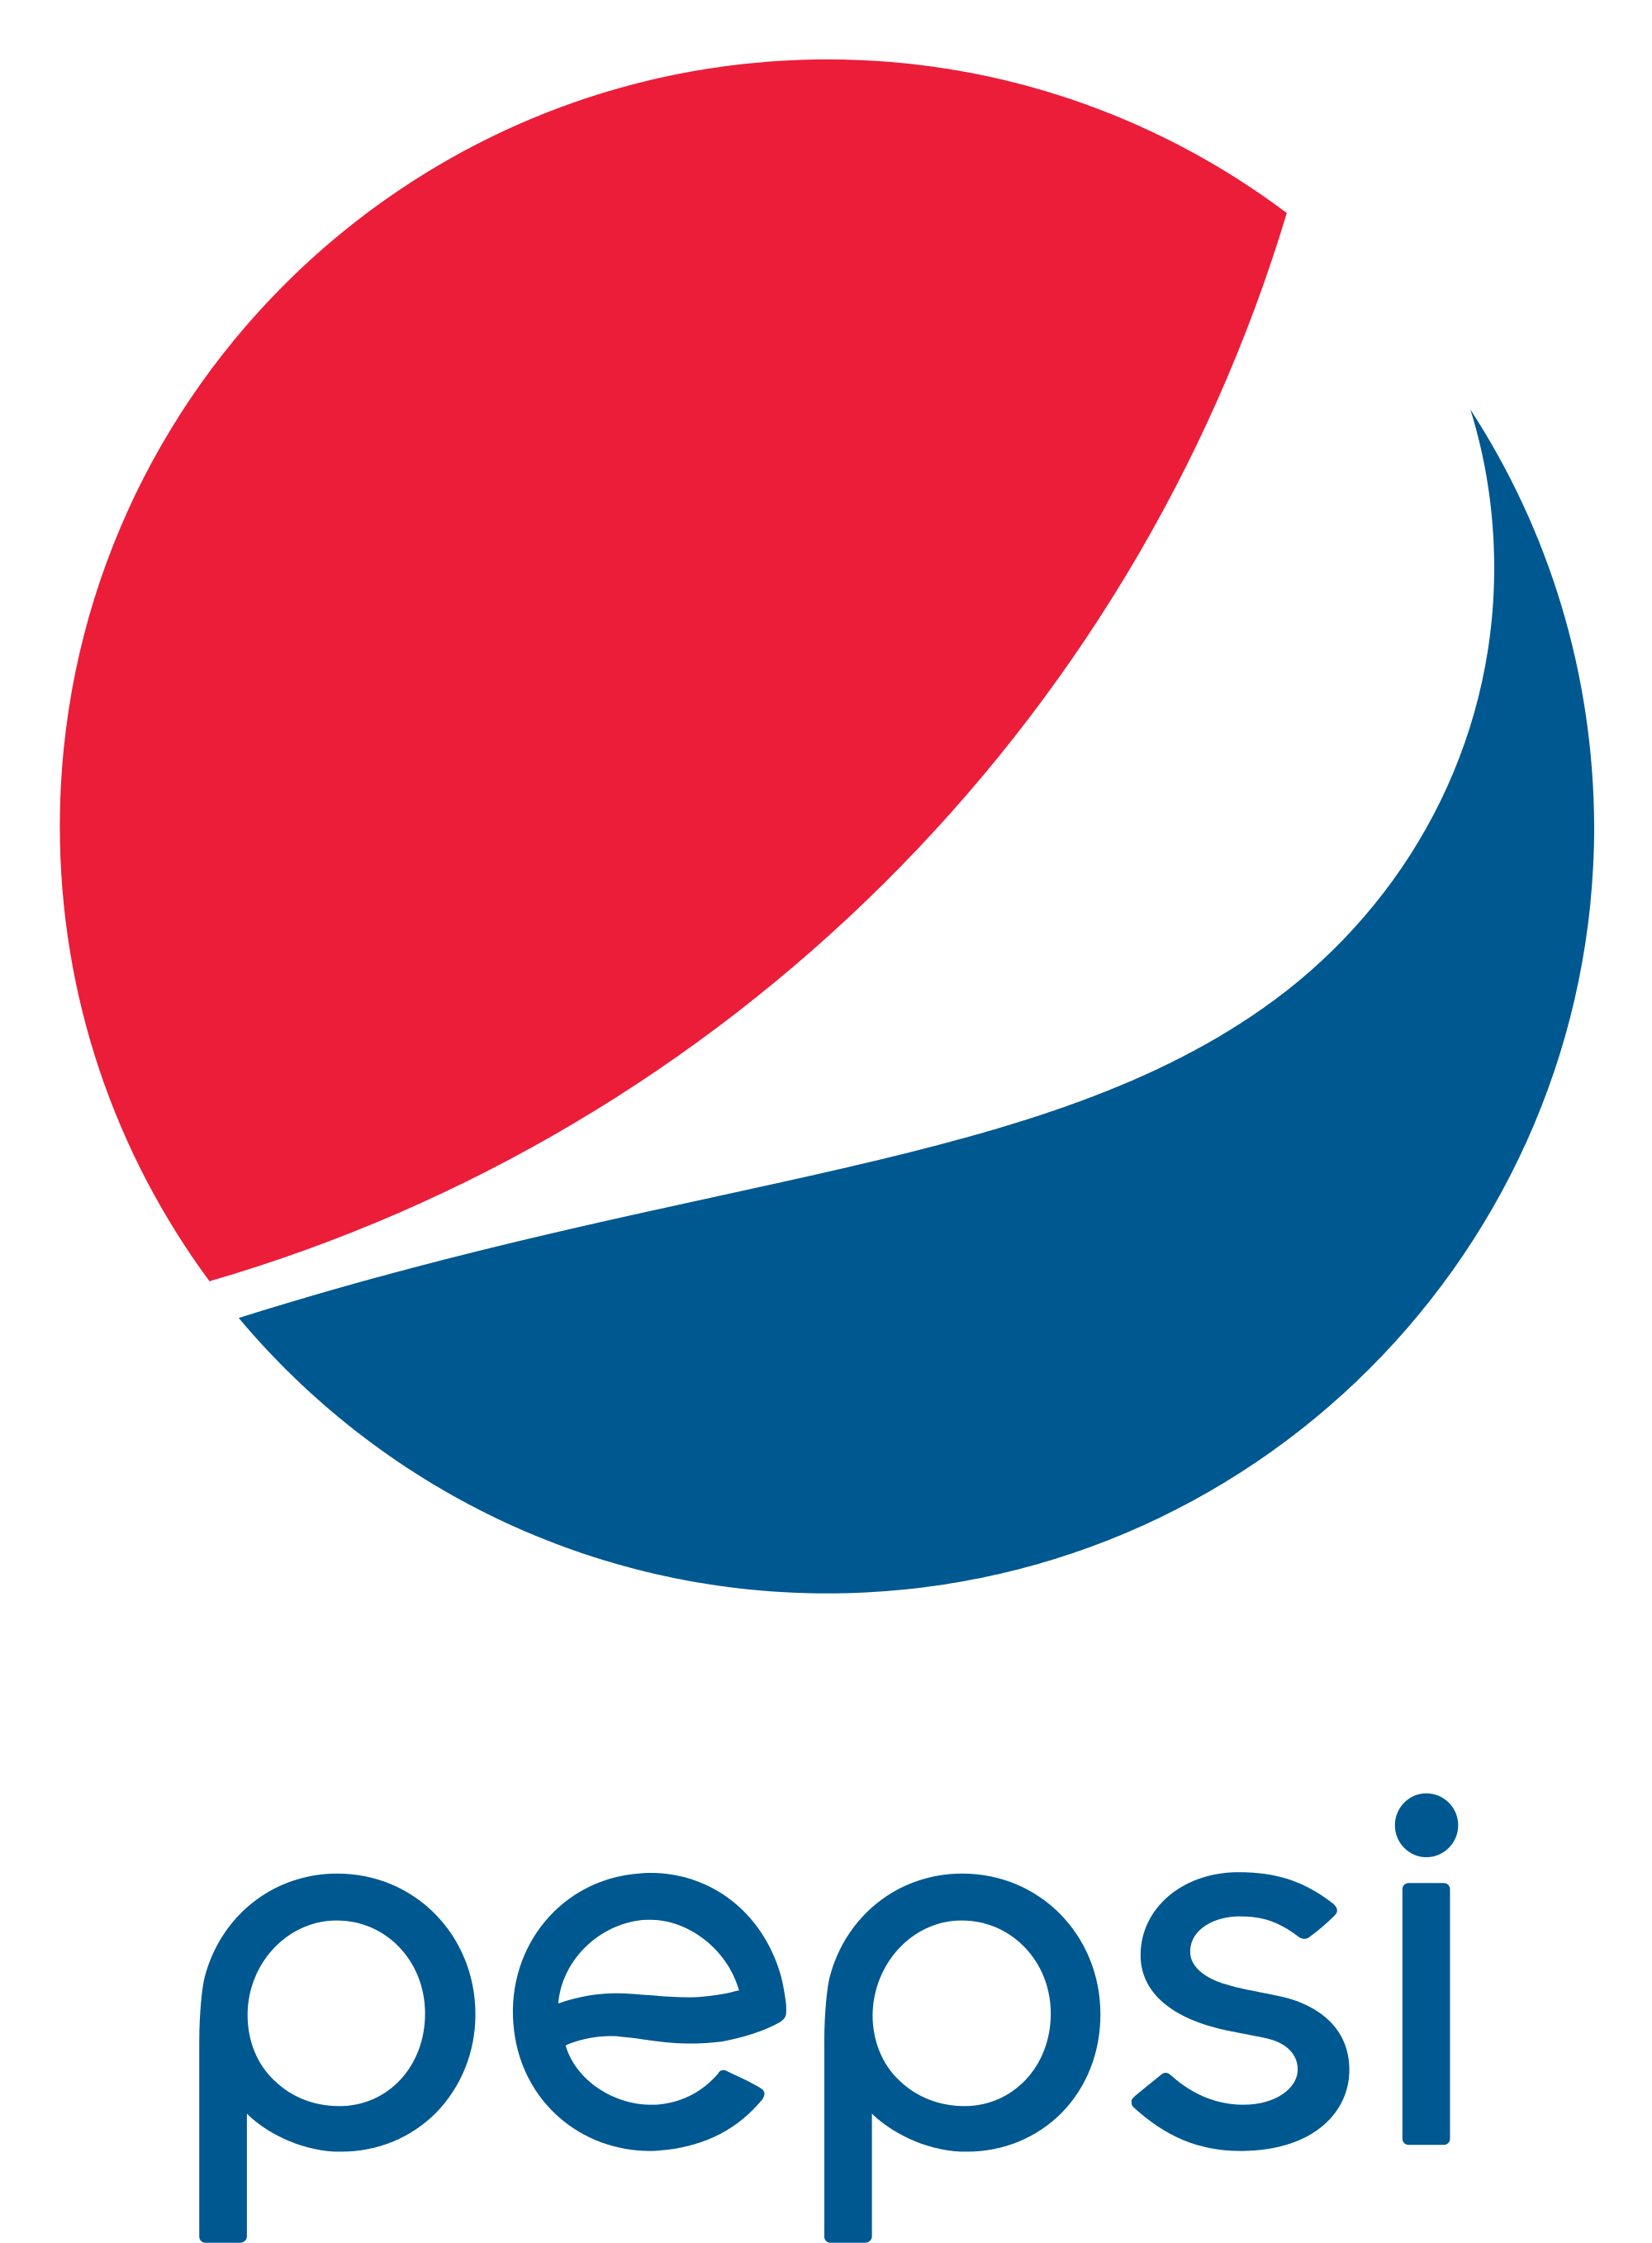 Images of Pepsi | 2000x2715